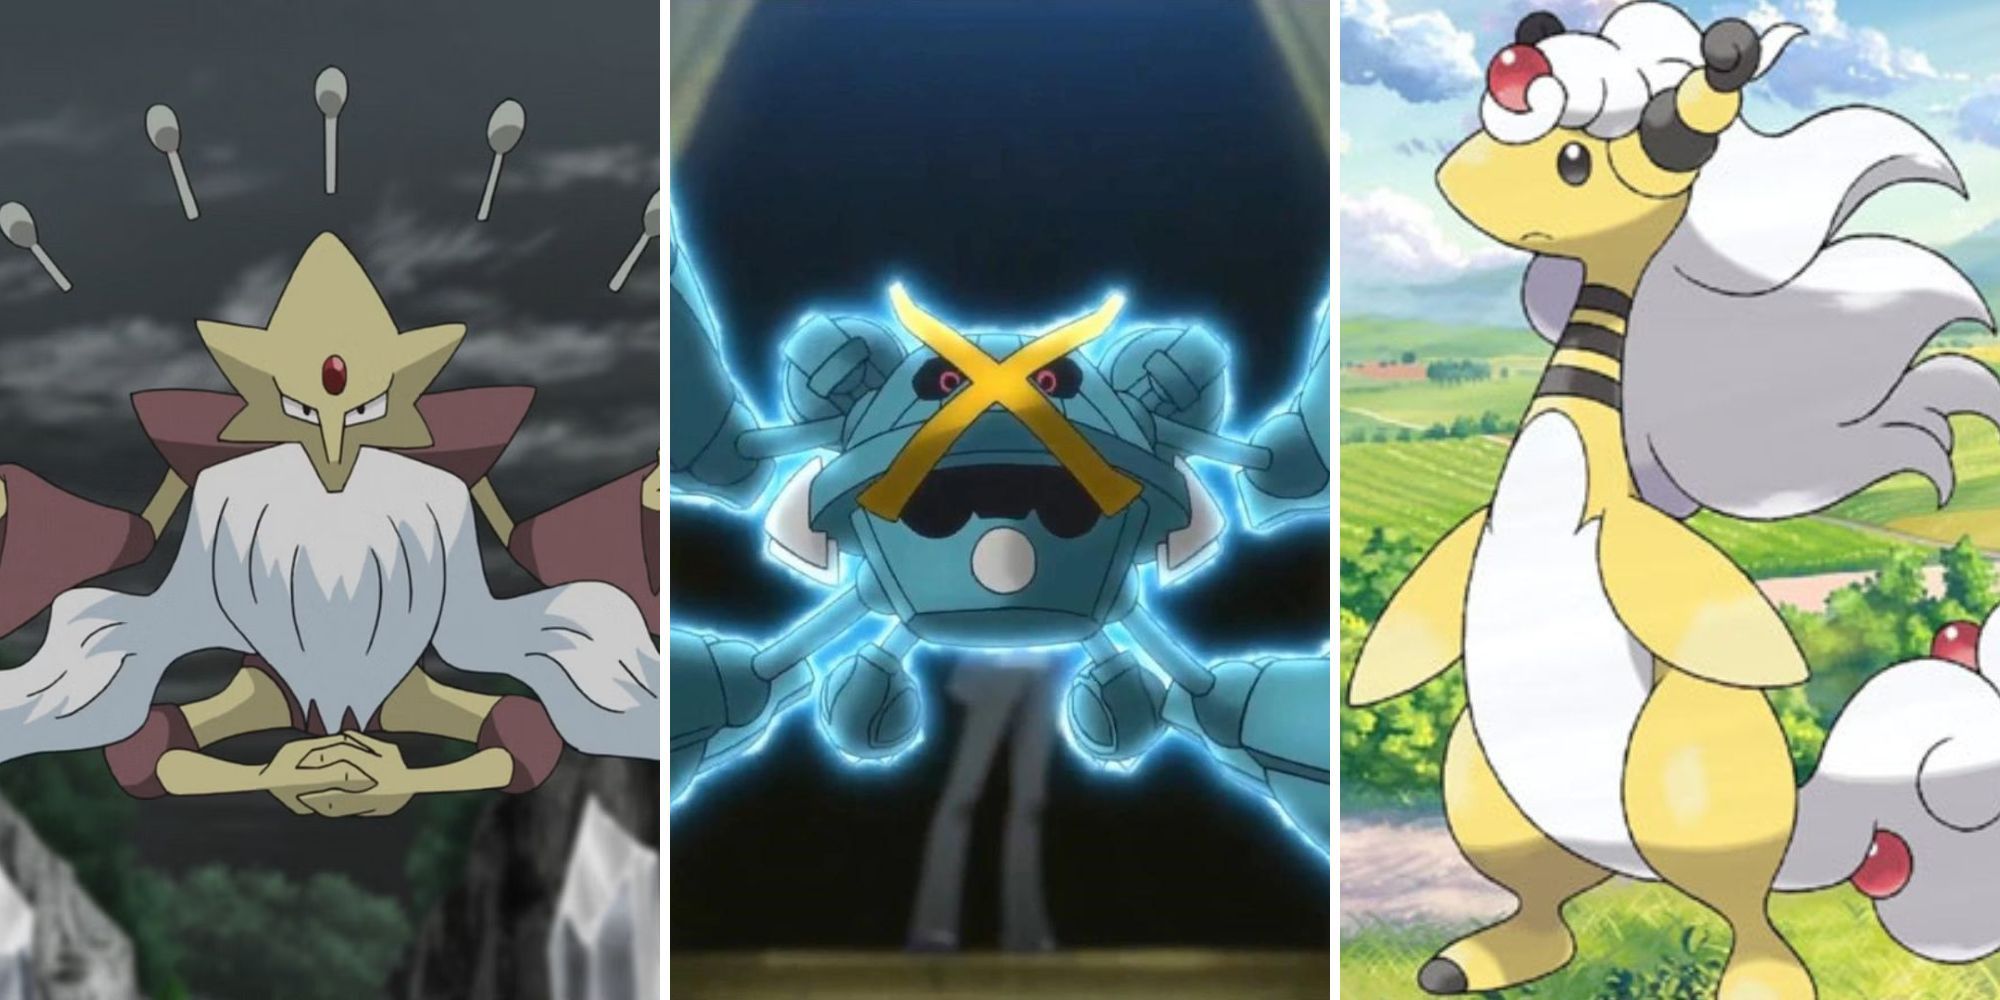 Future Pokemon Mega Evolutions: Mega Gardevoir X, Y ; Mega Gallade X, Y. 